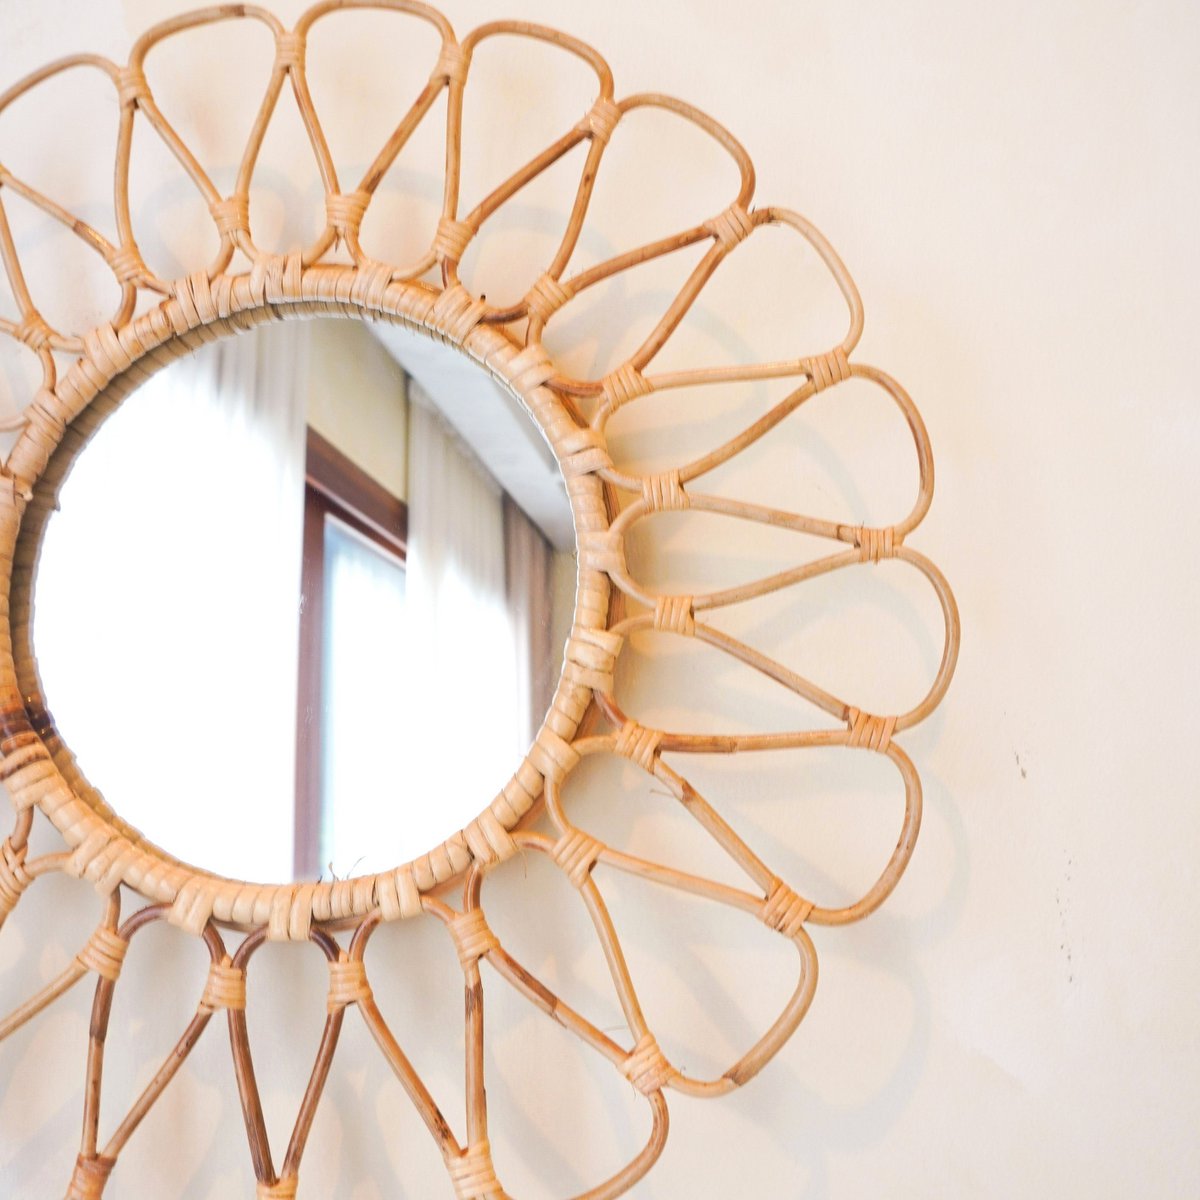 Small rattan mirror DANAU, wall decoration